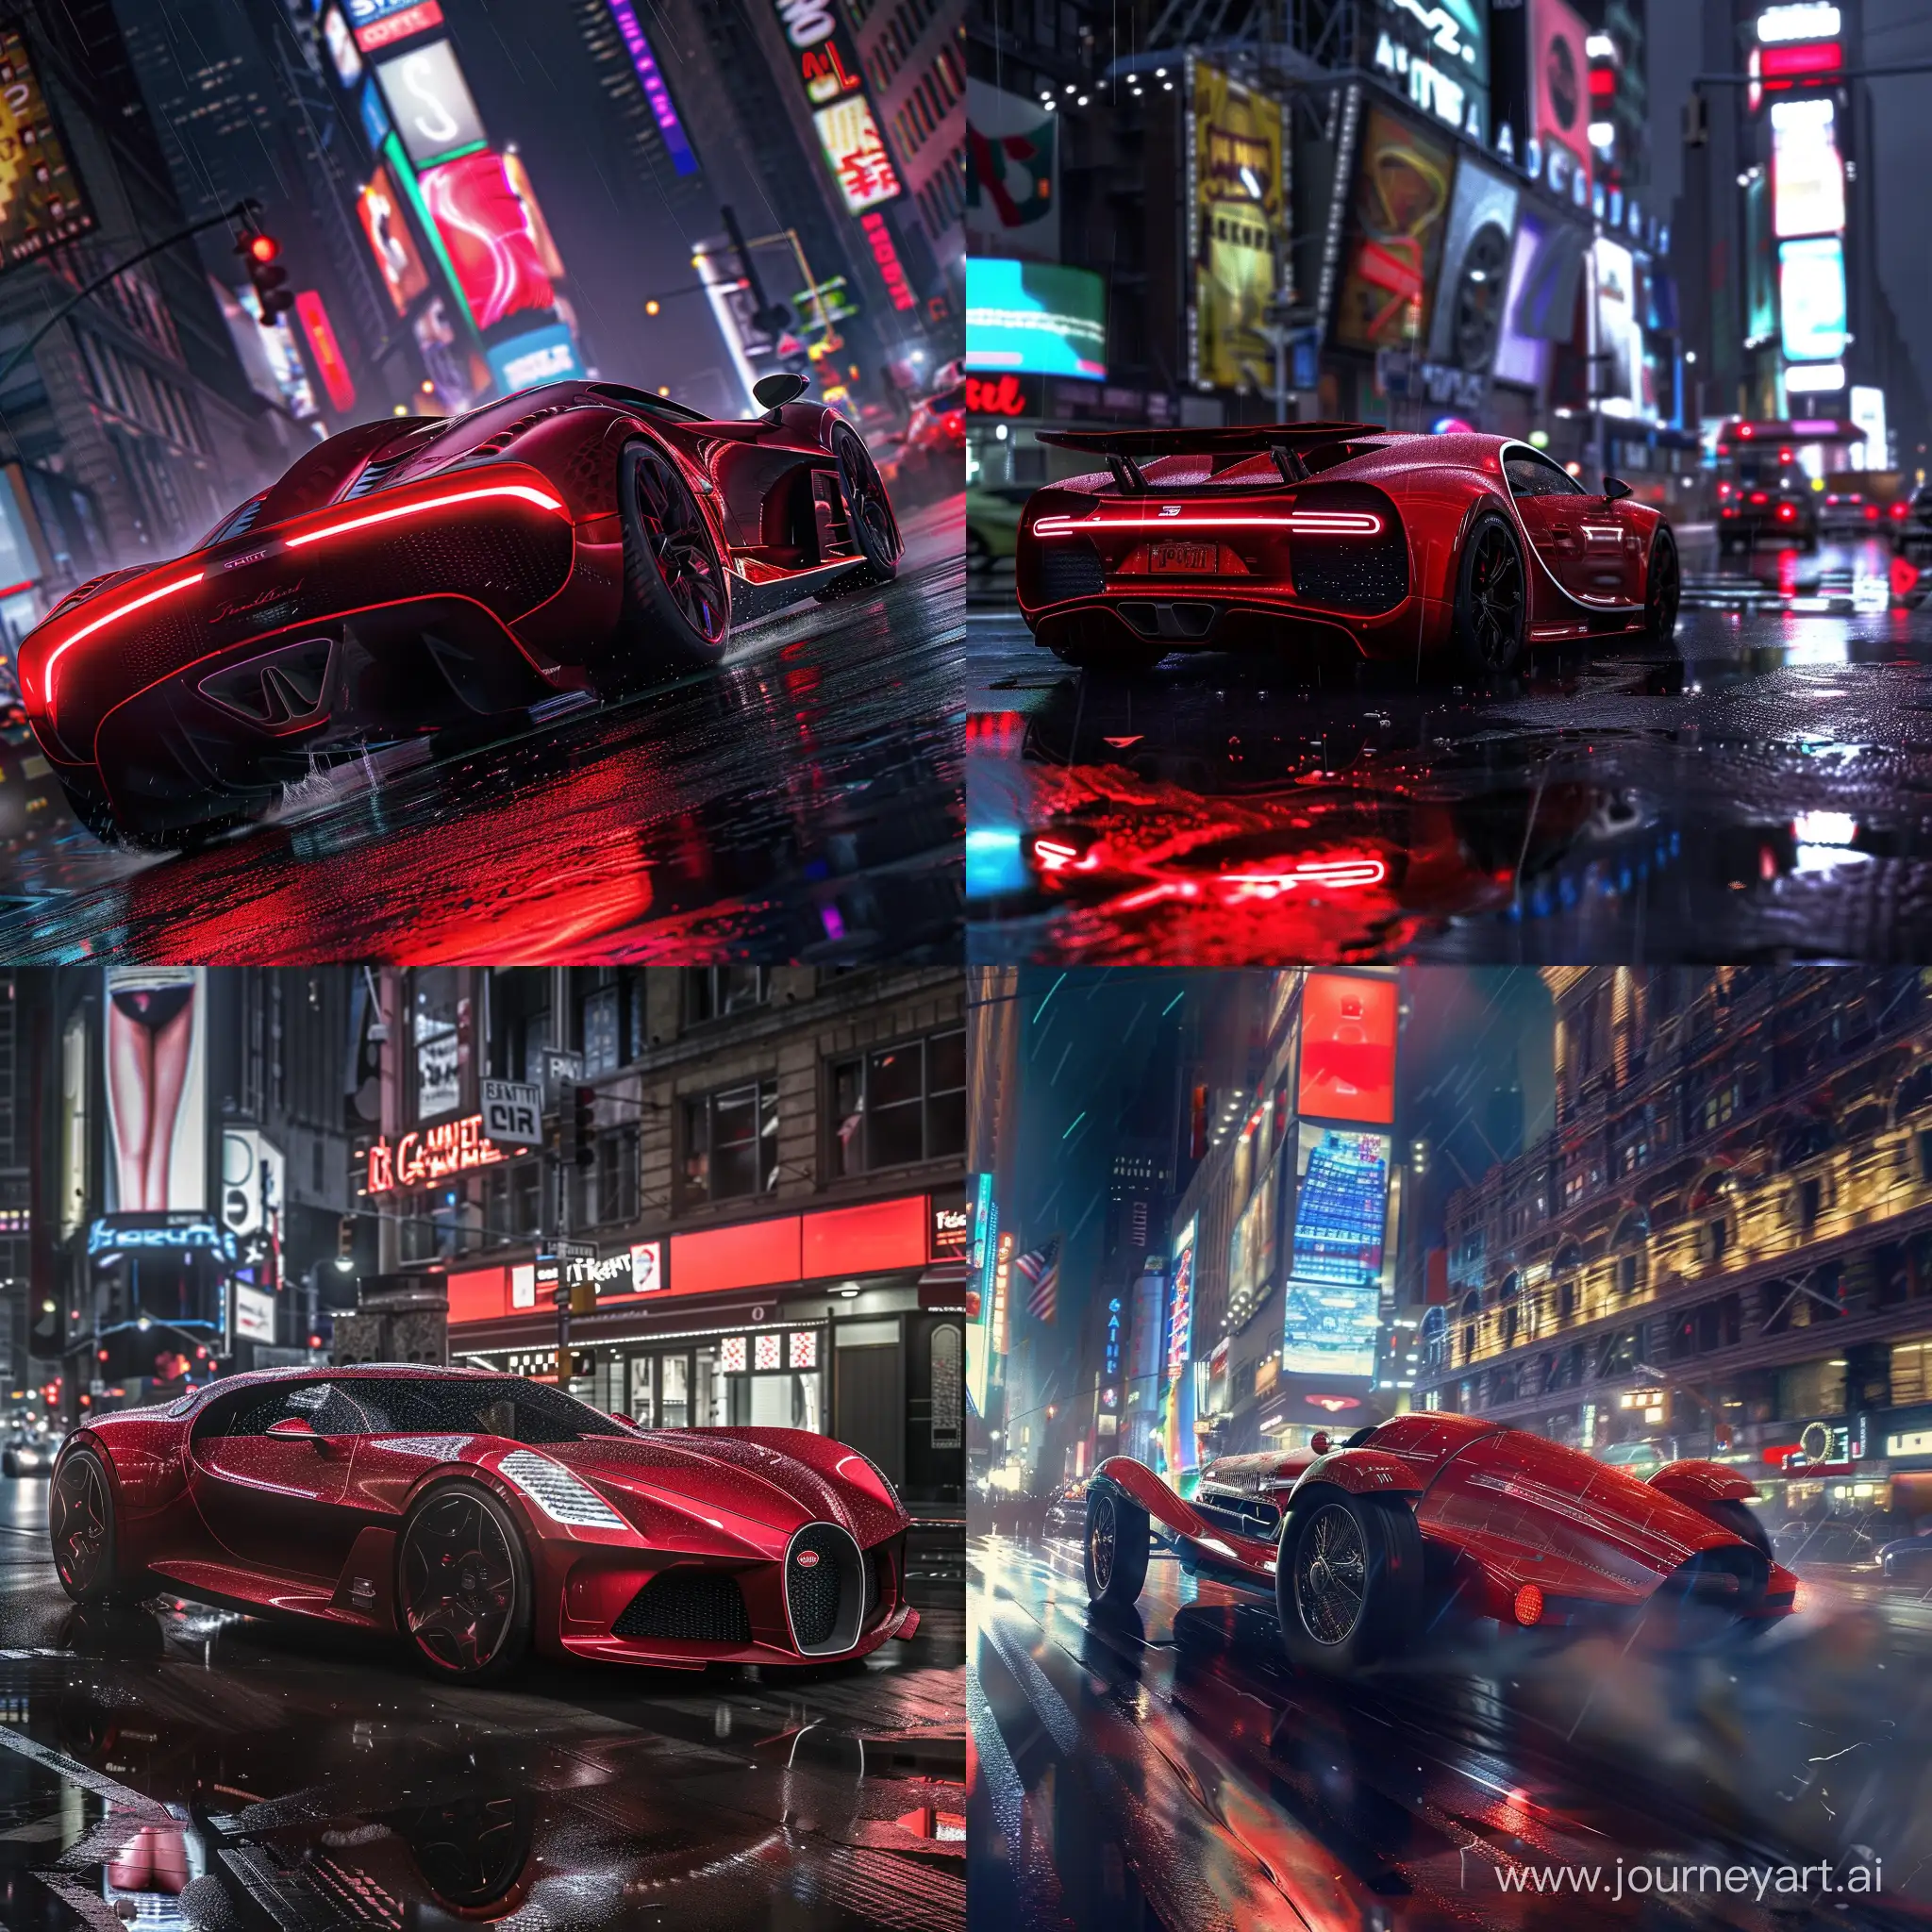 Luxury-Bugatti-Red-Car-in-New-York-City